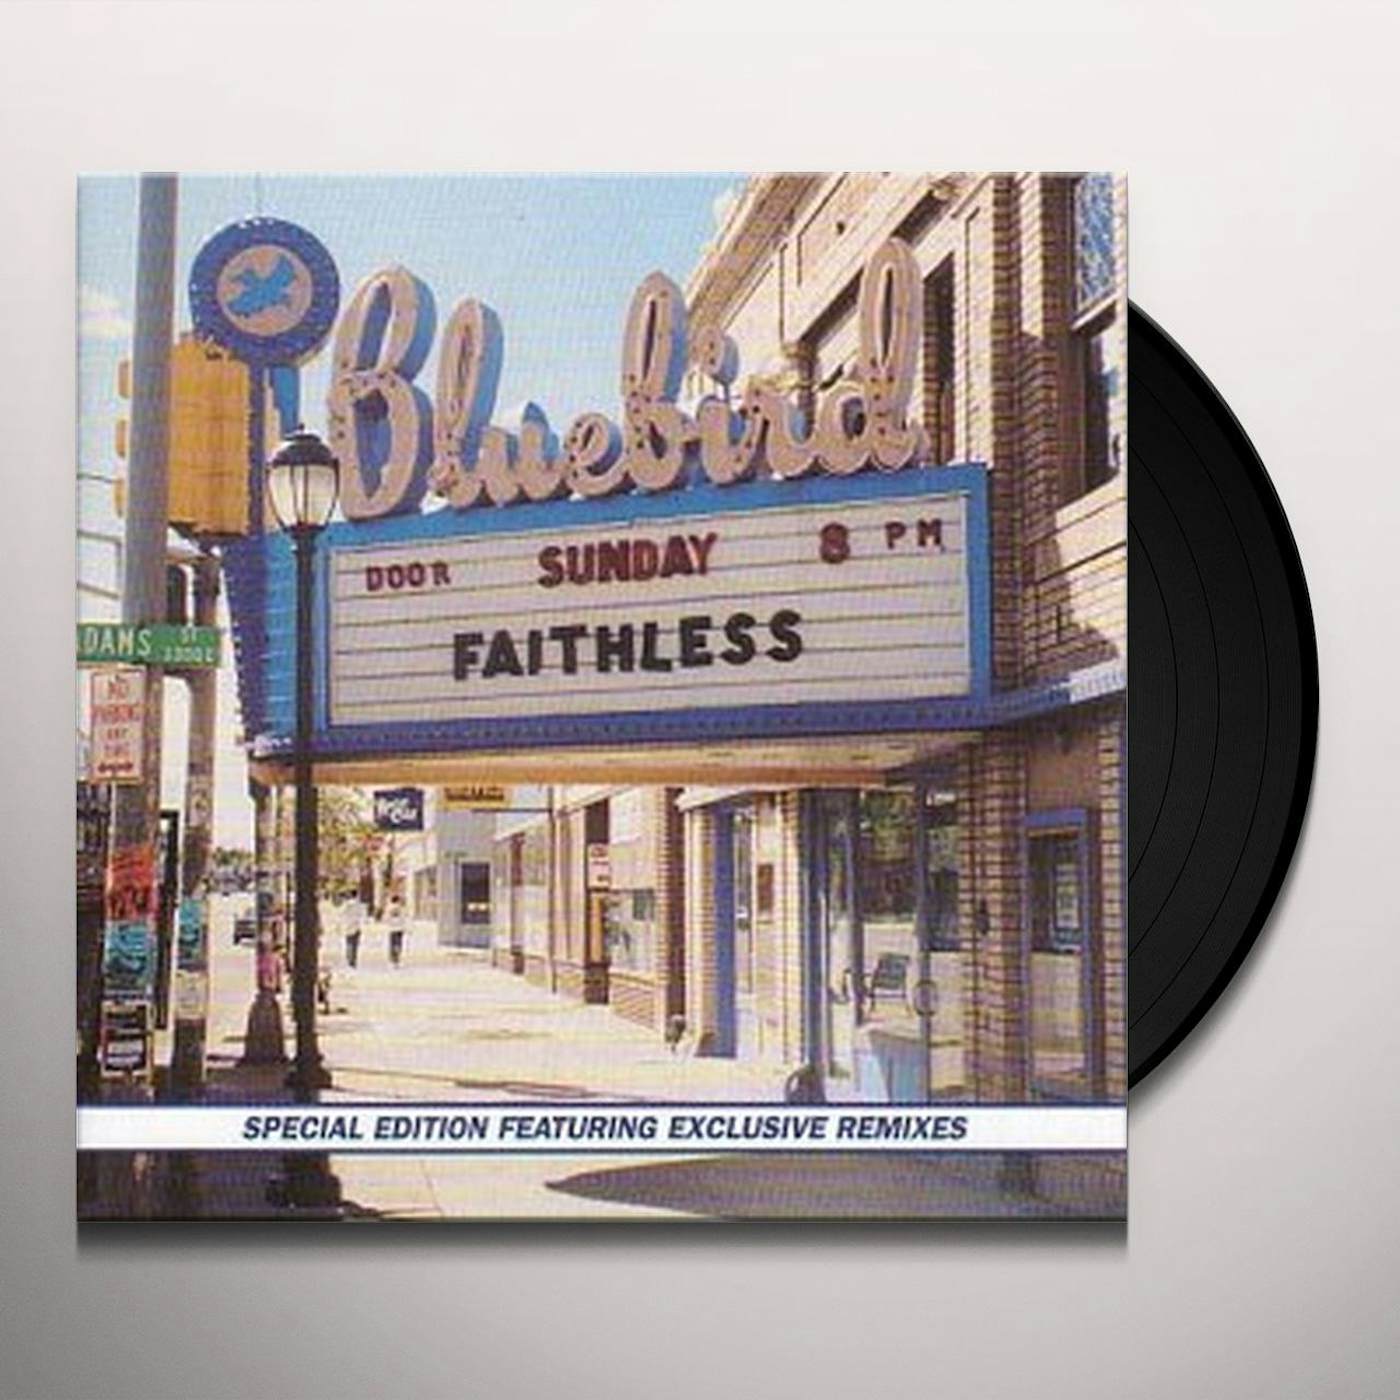 Faithless SUNDAY 8 PM Vinyl Record